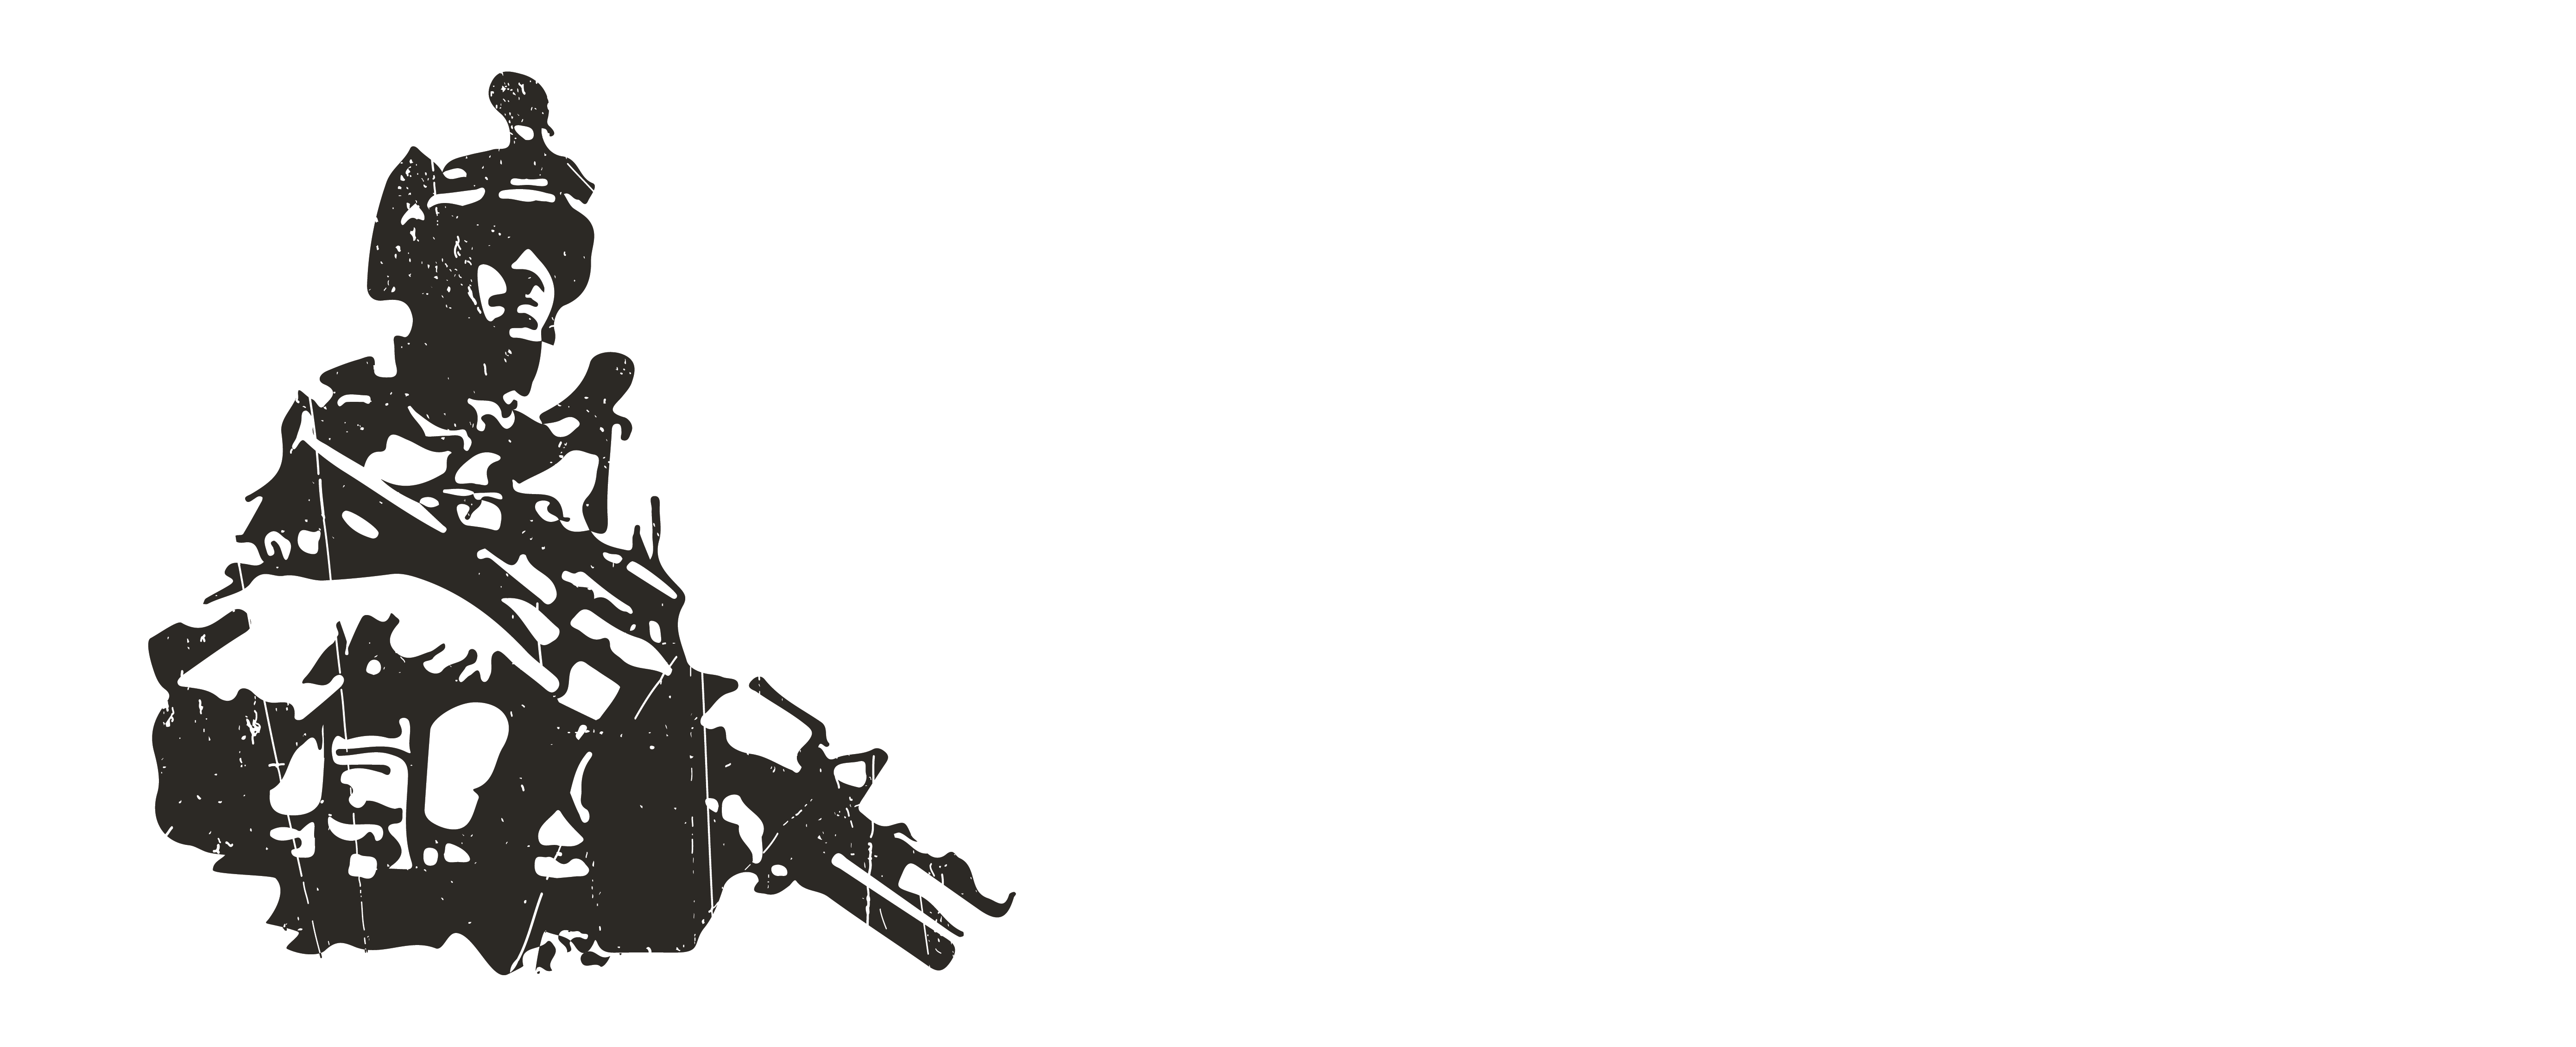 Patriots Honor